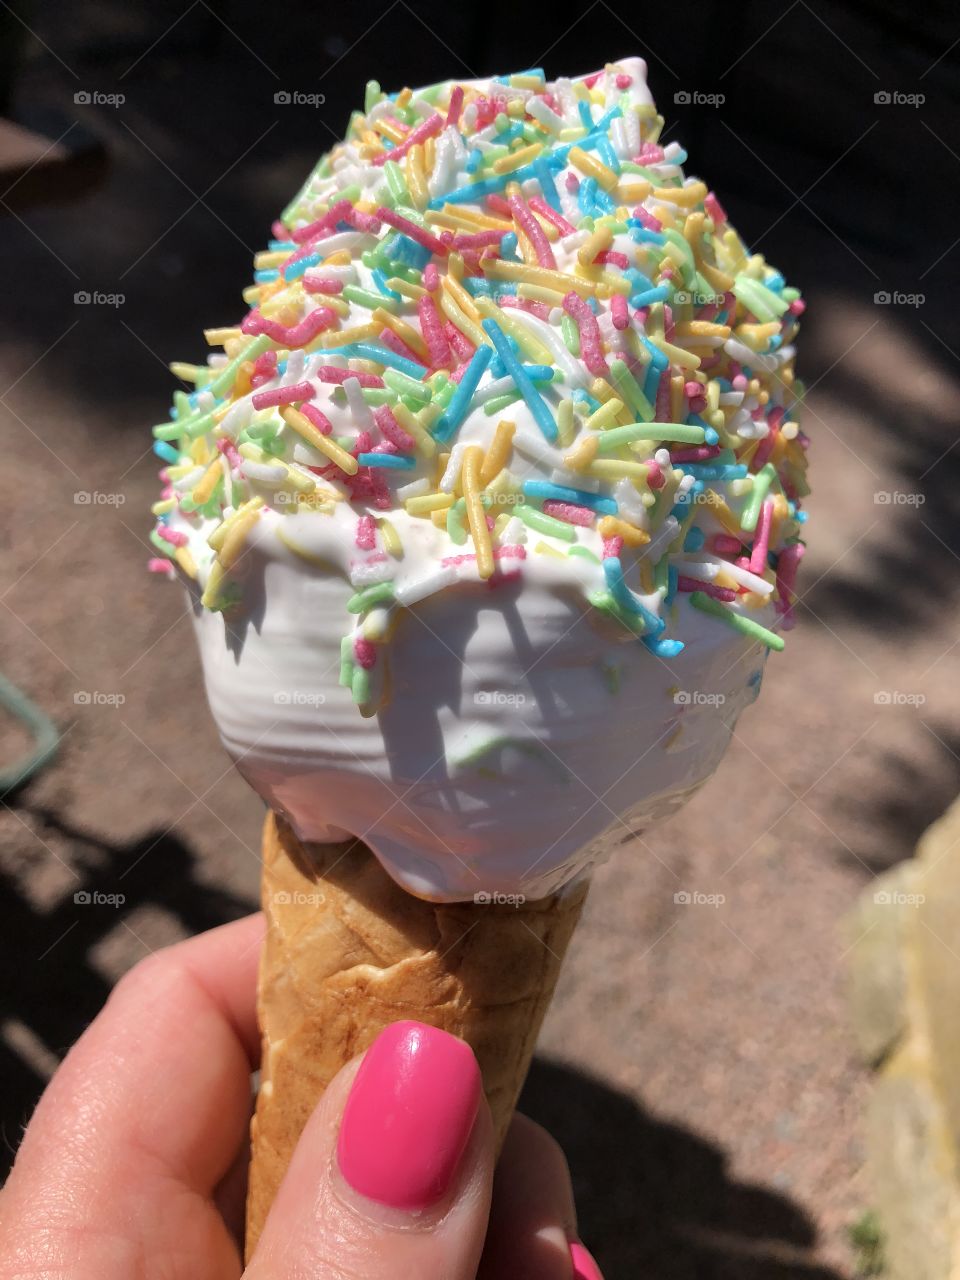 Ice cream